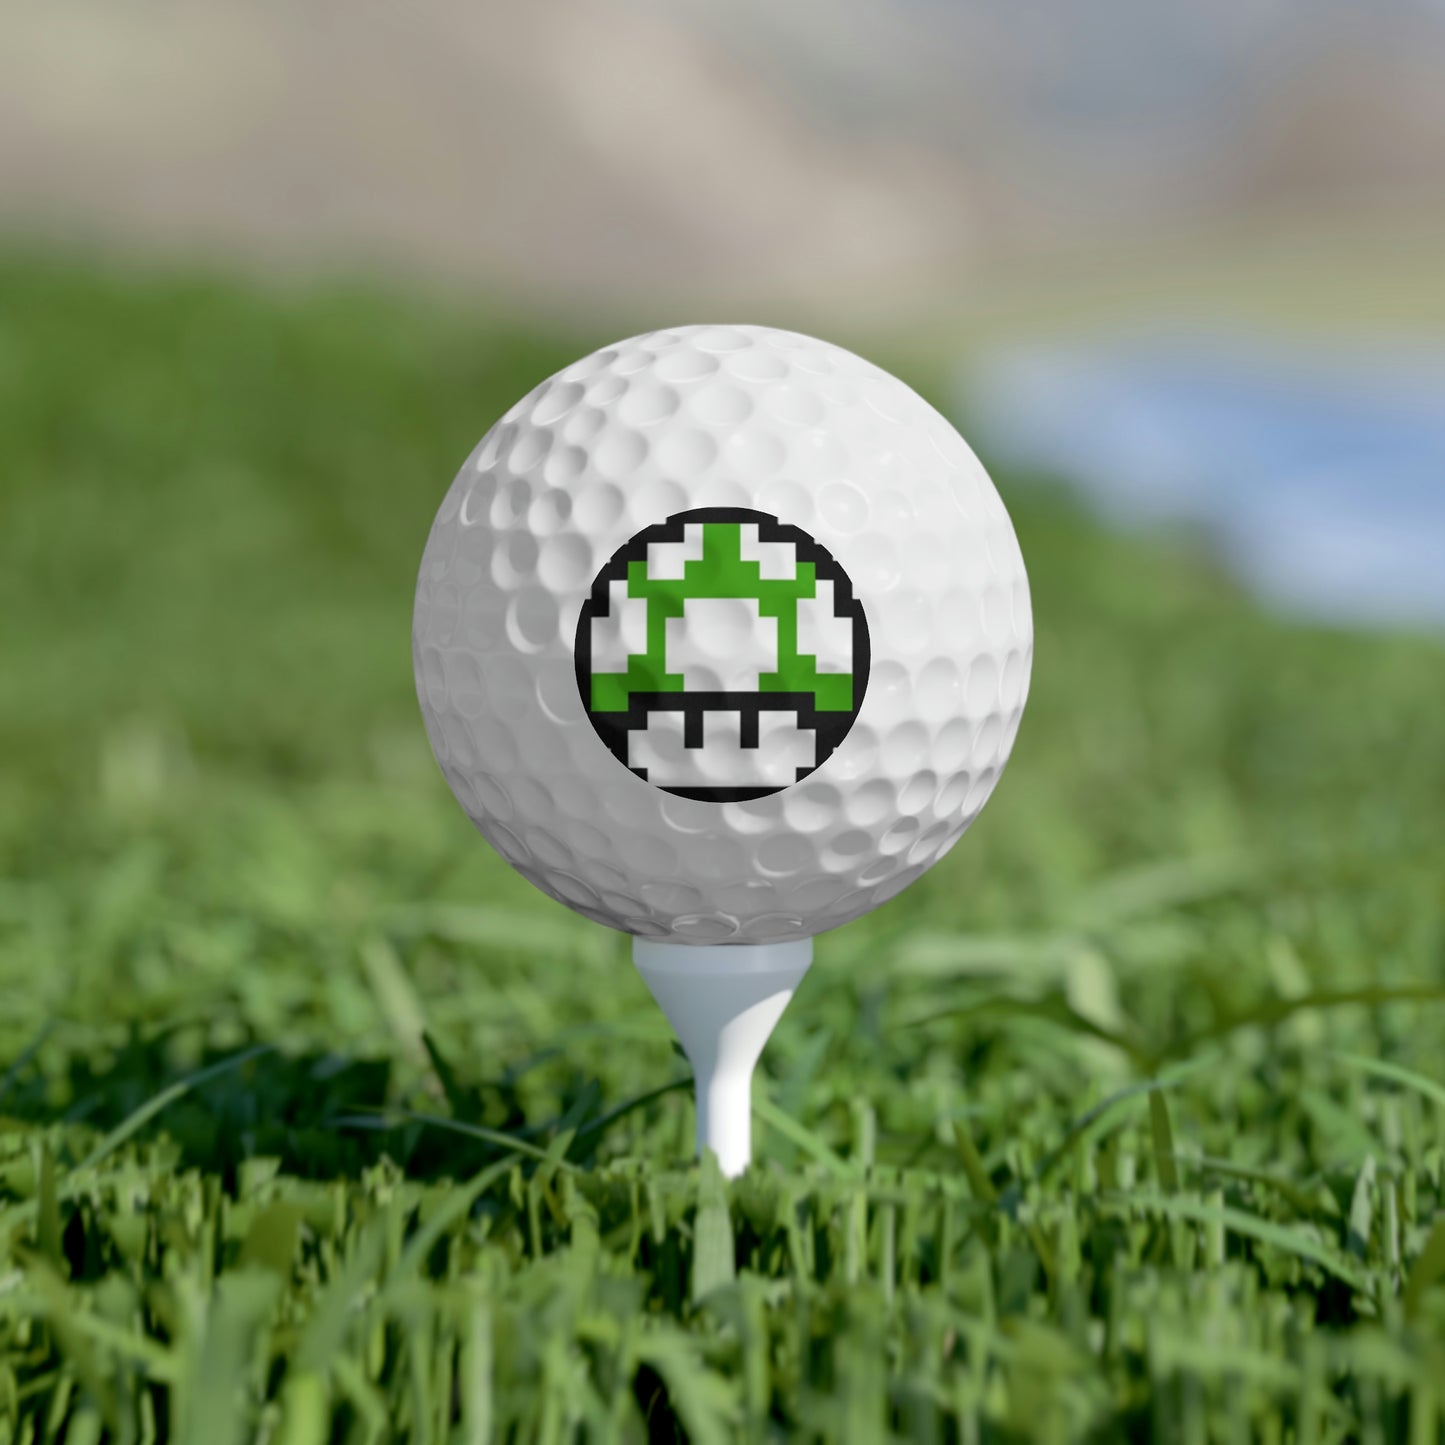 Green Mushroom 8 Bit Style Golf Balls, 6pcs